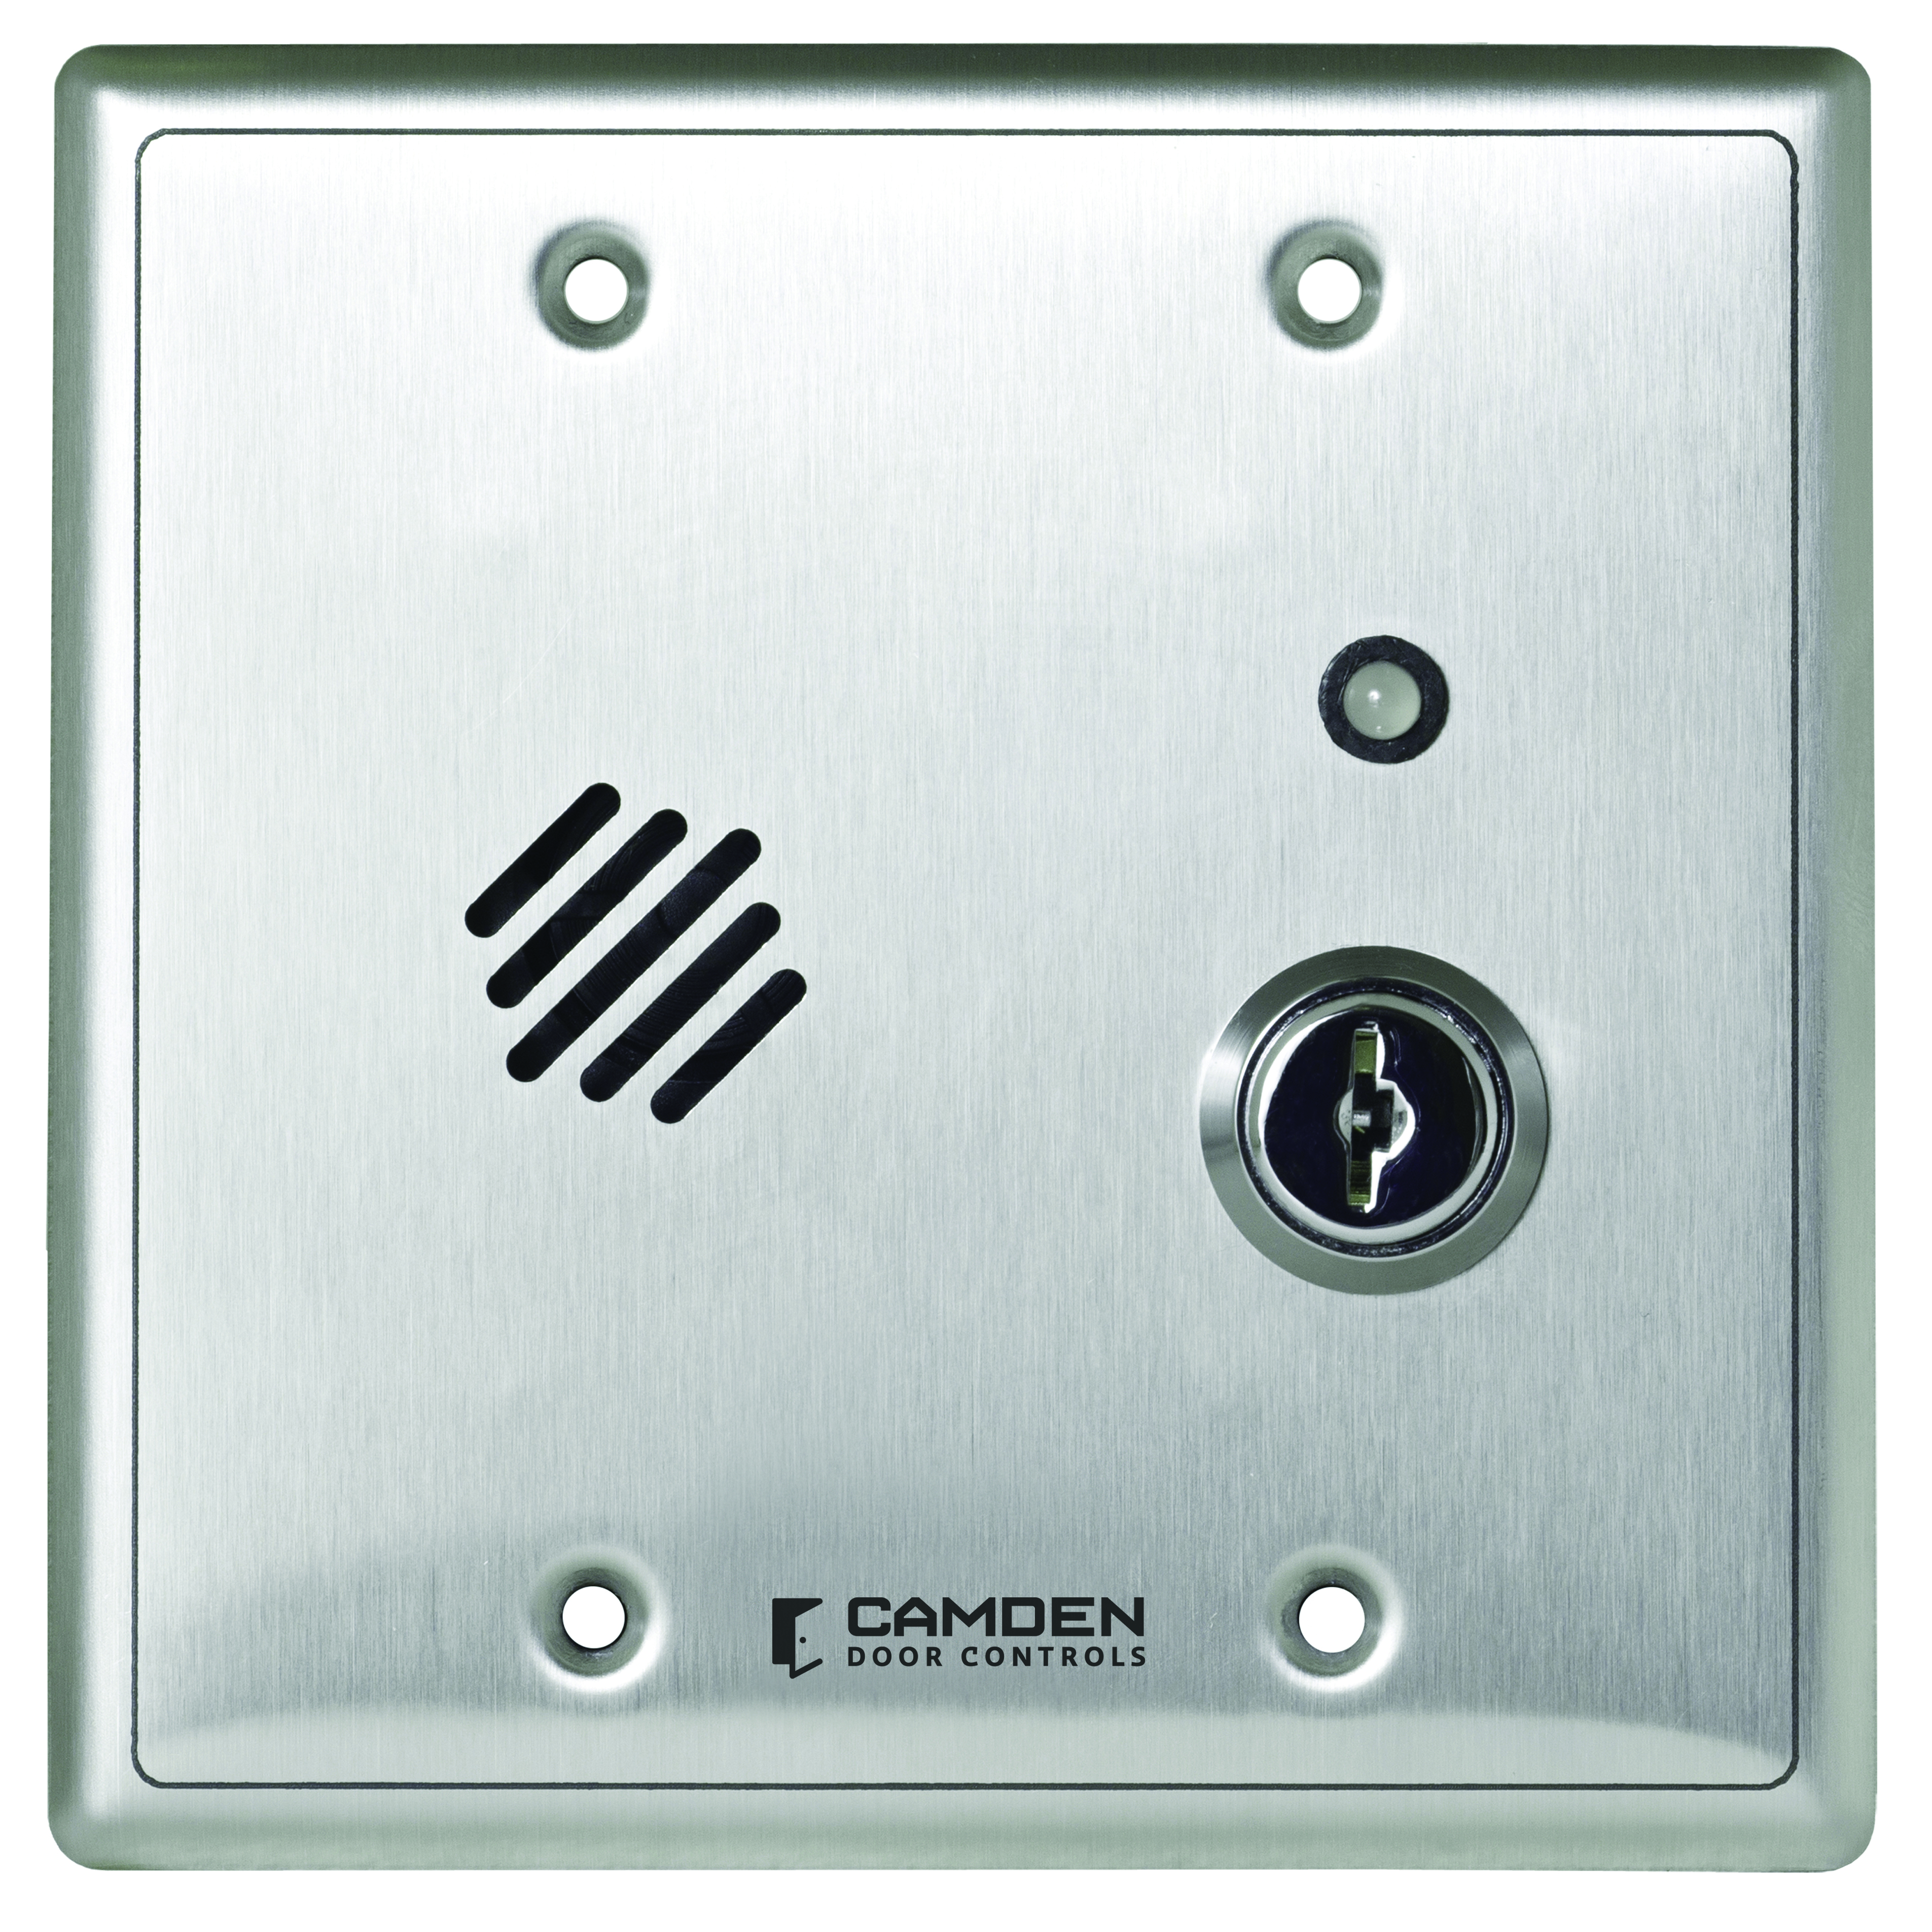 CX-1000/74: MicroMinder - Adjustable Time Delays - Control